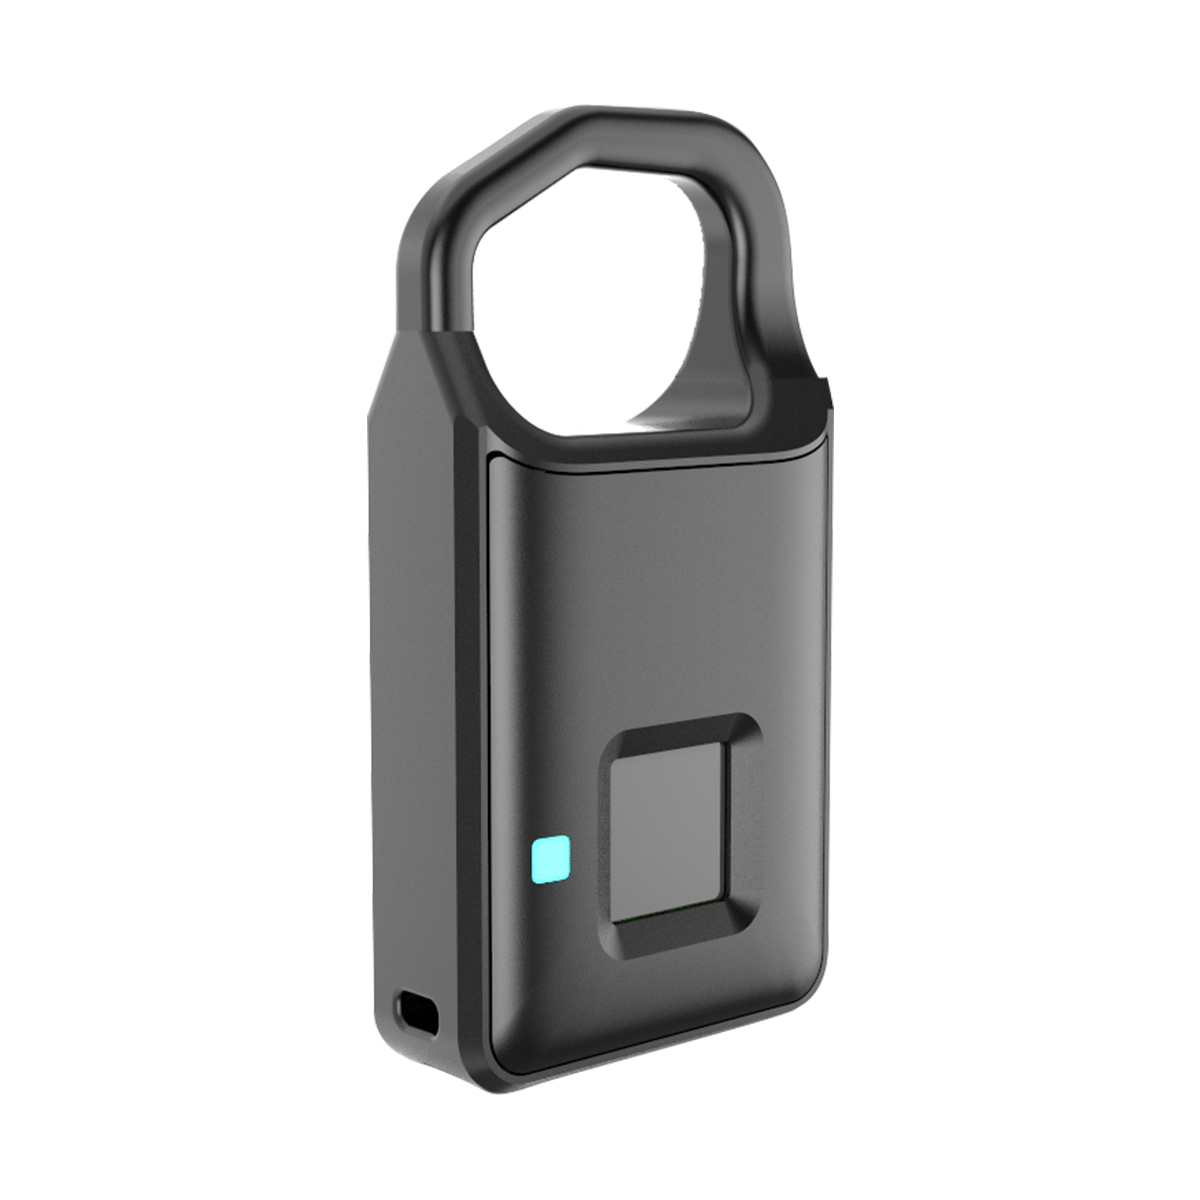 P4 USB Rechargeable Fingerprint Lock - Smart Keyless Anti-Theft Padlock, uitcase Door Lock Burglar Alarm Security Systems